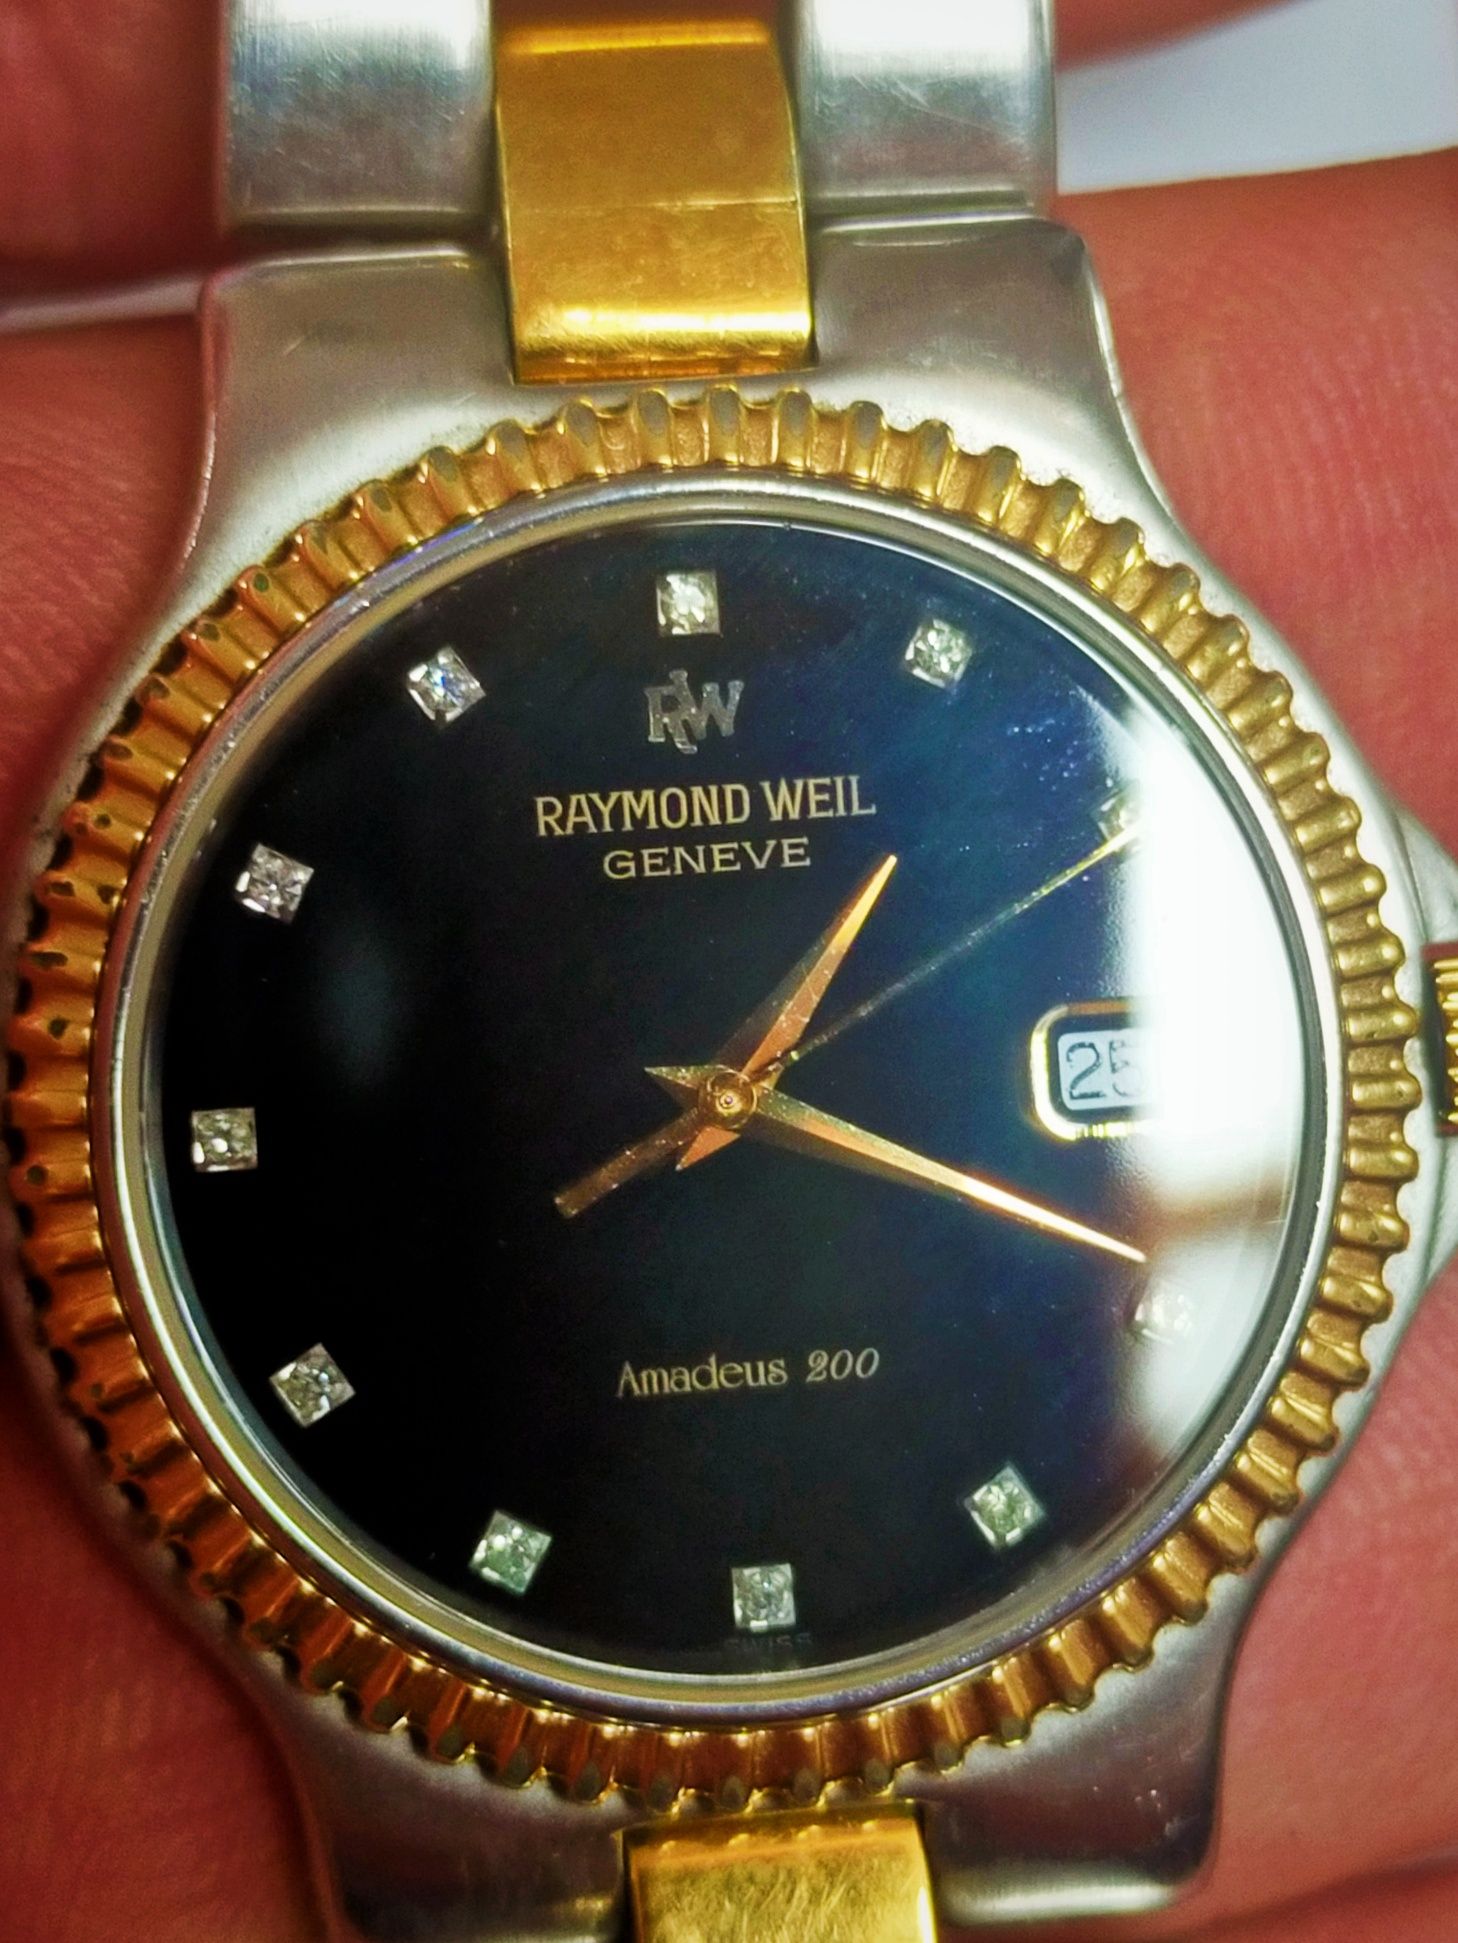 Sprzedam piękny zegarek Raimond Well Geneva